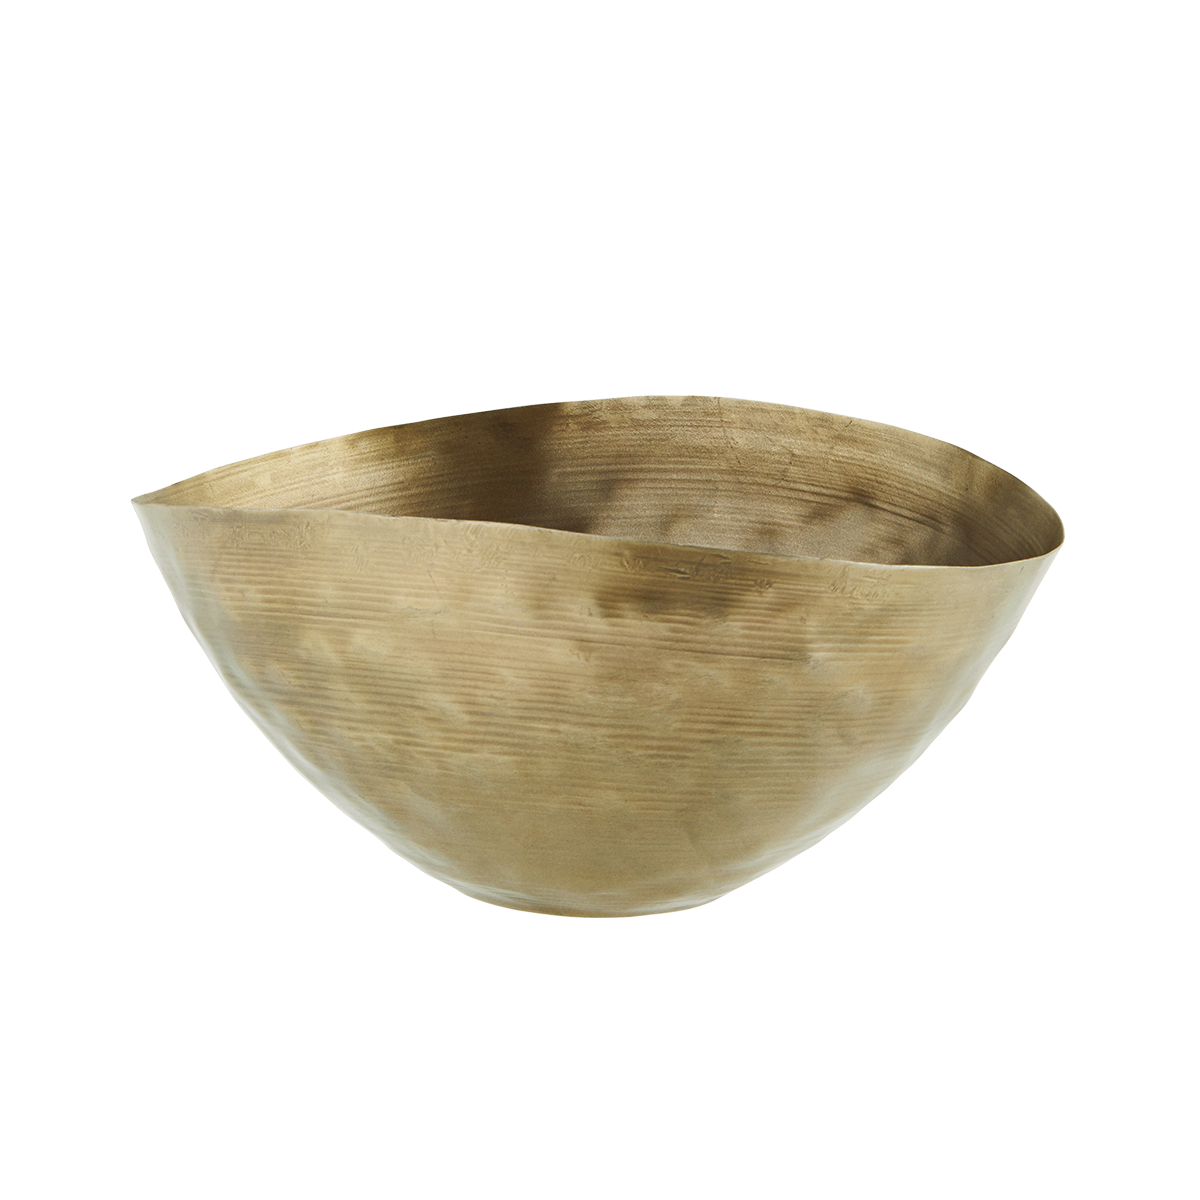 Organic shaped bowl